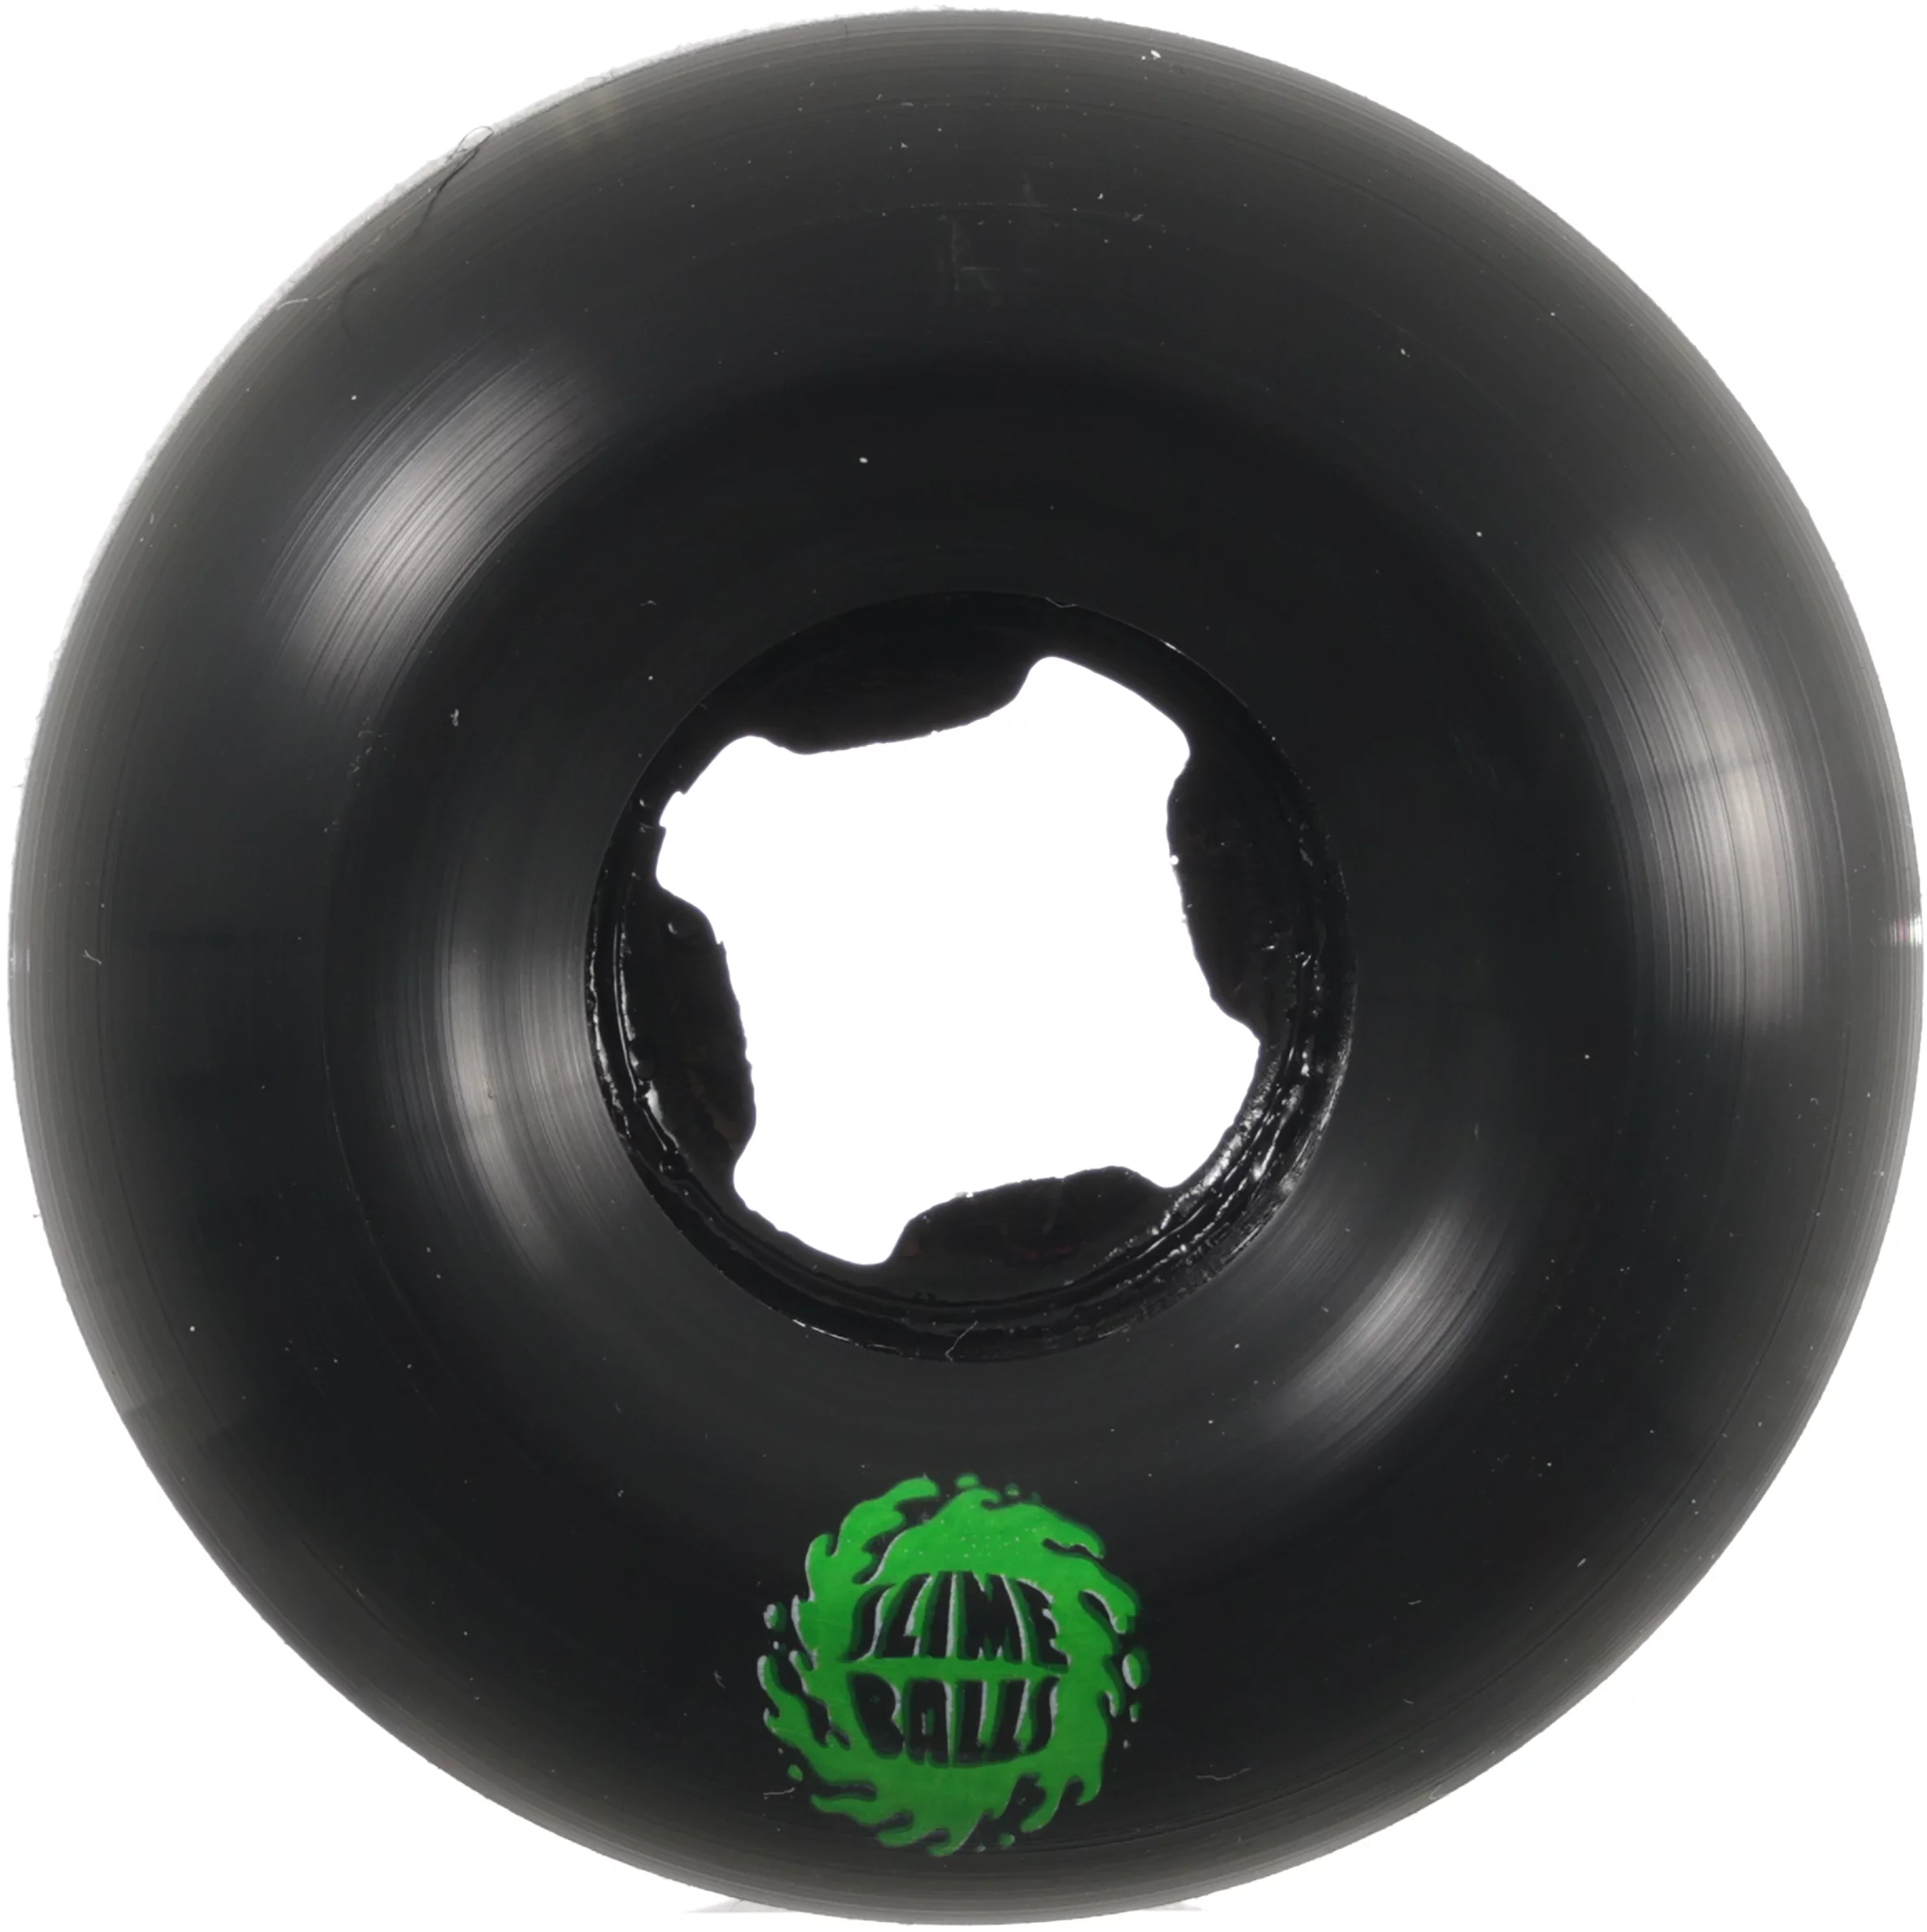 Santa Cruz Slime Balls Vomit Wheels Mini Green 97a 54mm